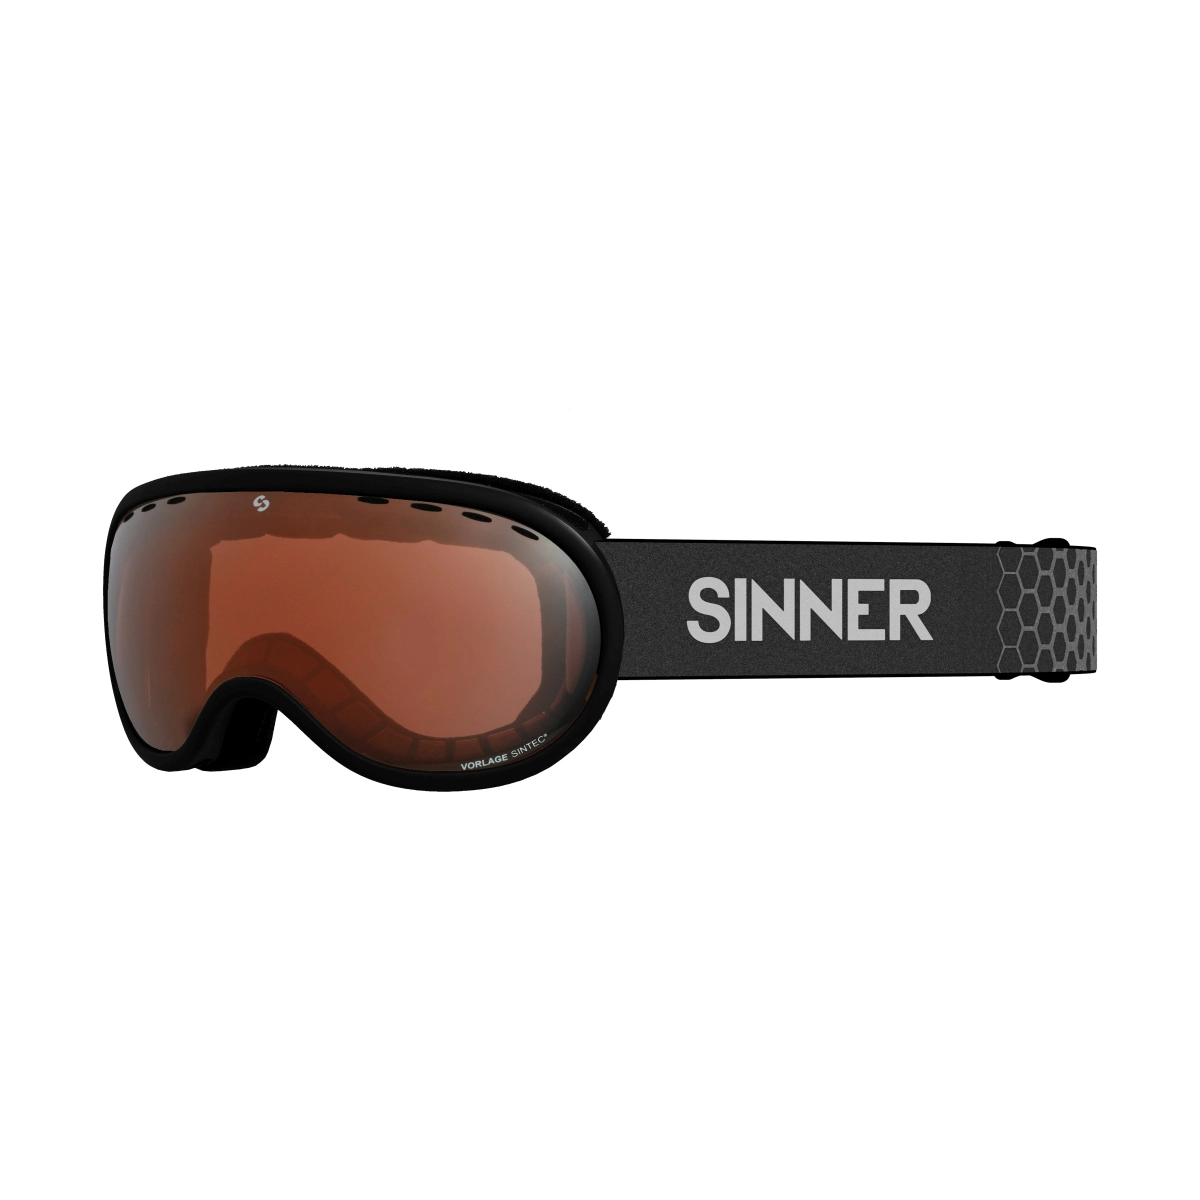 vos Roux je bent Sinner Vorlage S Skibril - Goggles - Accessoires - Wintersport - Intersport  van den Broek / Biggelaar